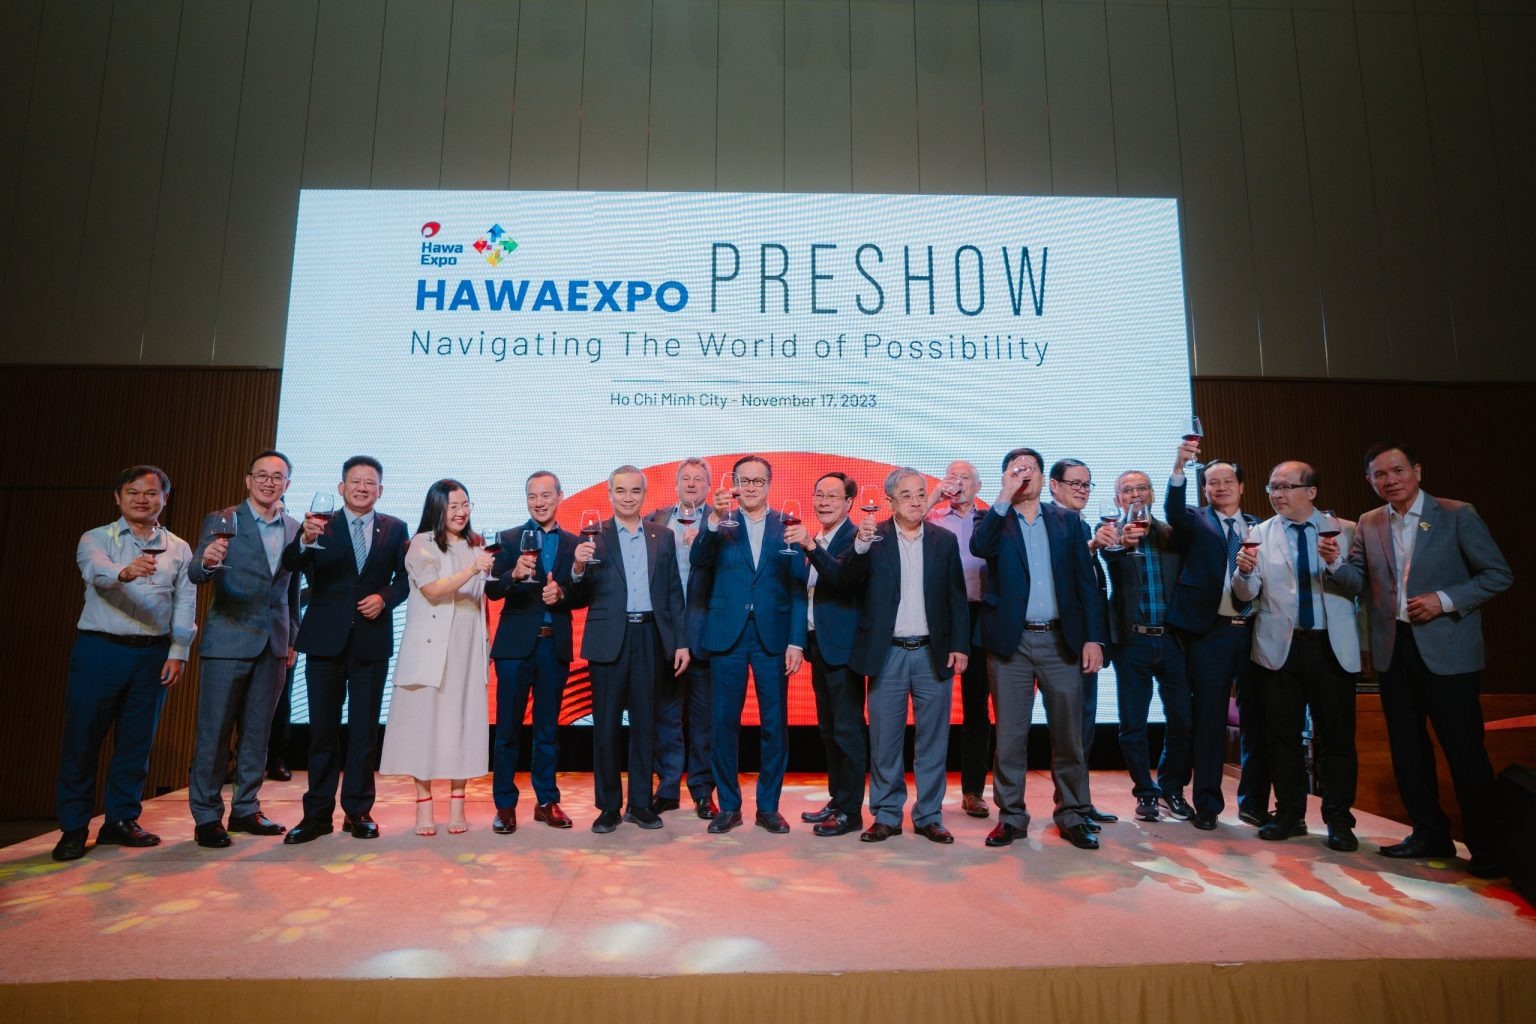 OVERVIEW OF HAWAEXPO PRESHOW EVENT